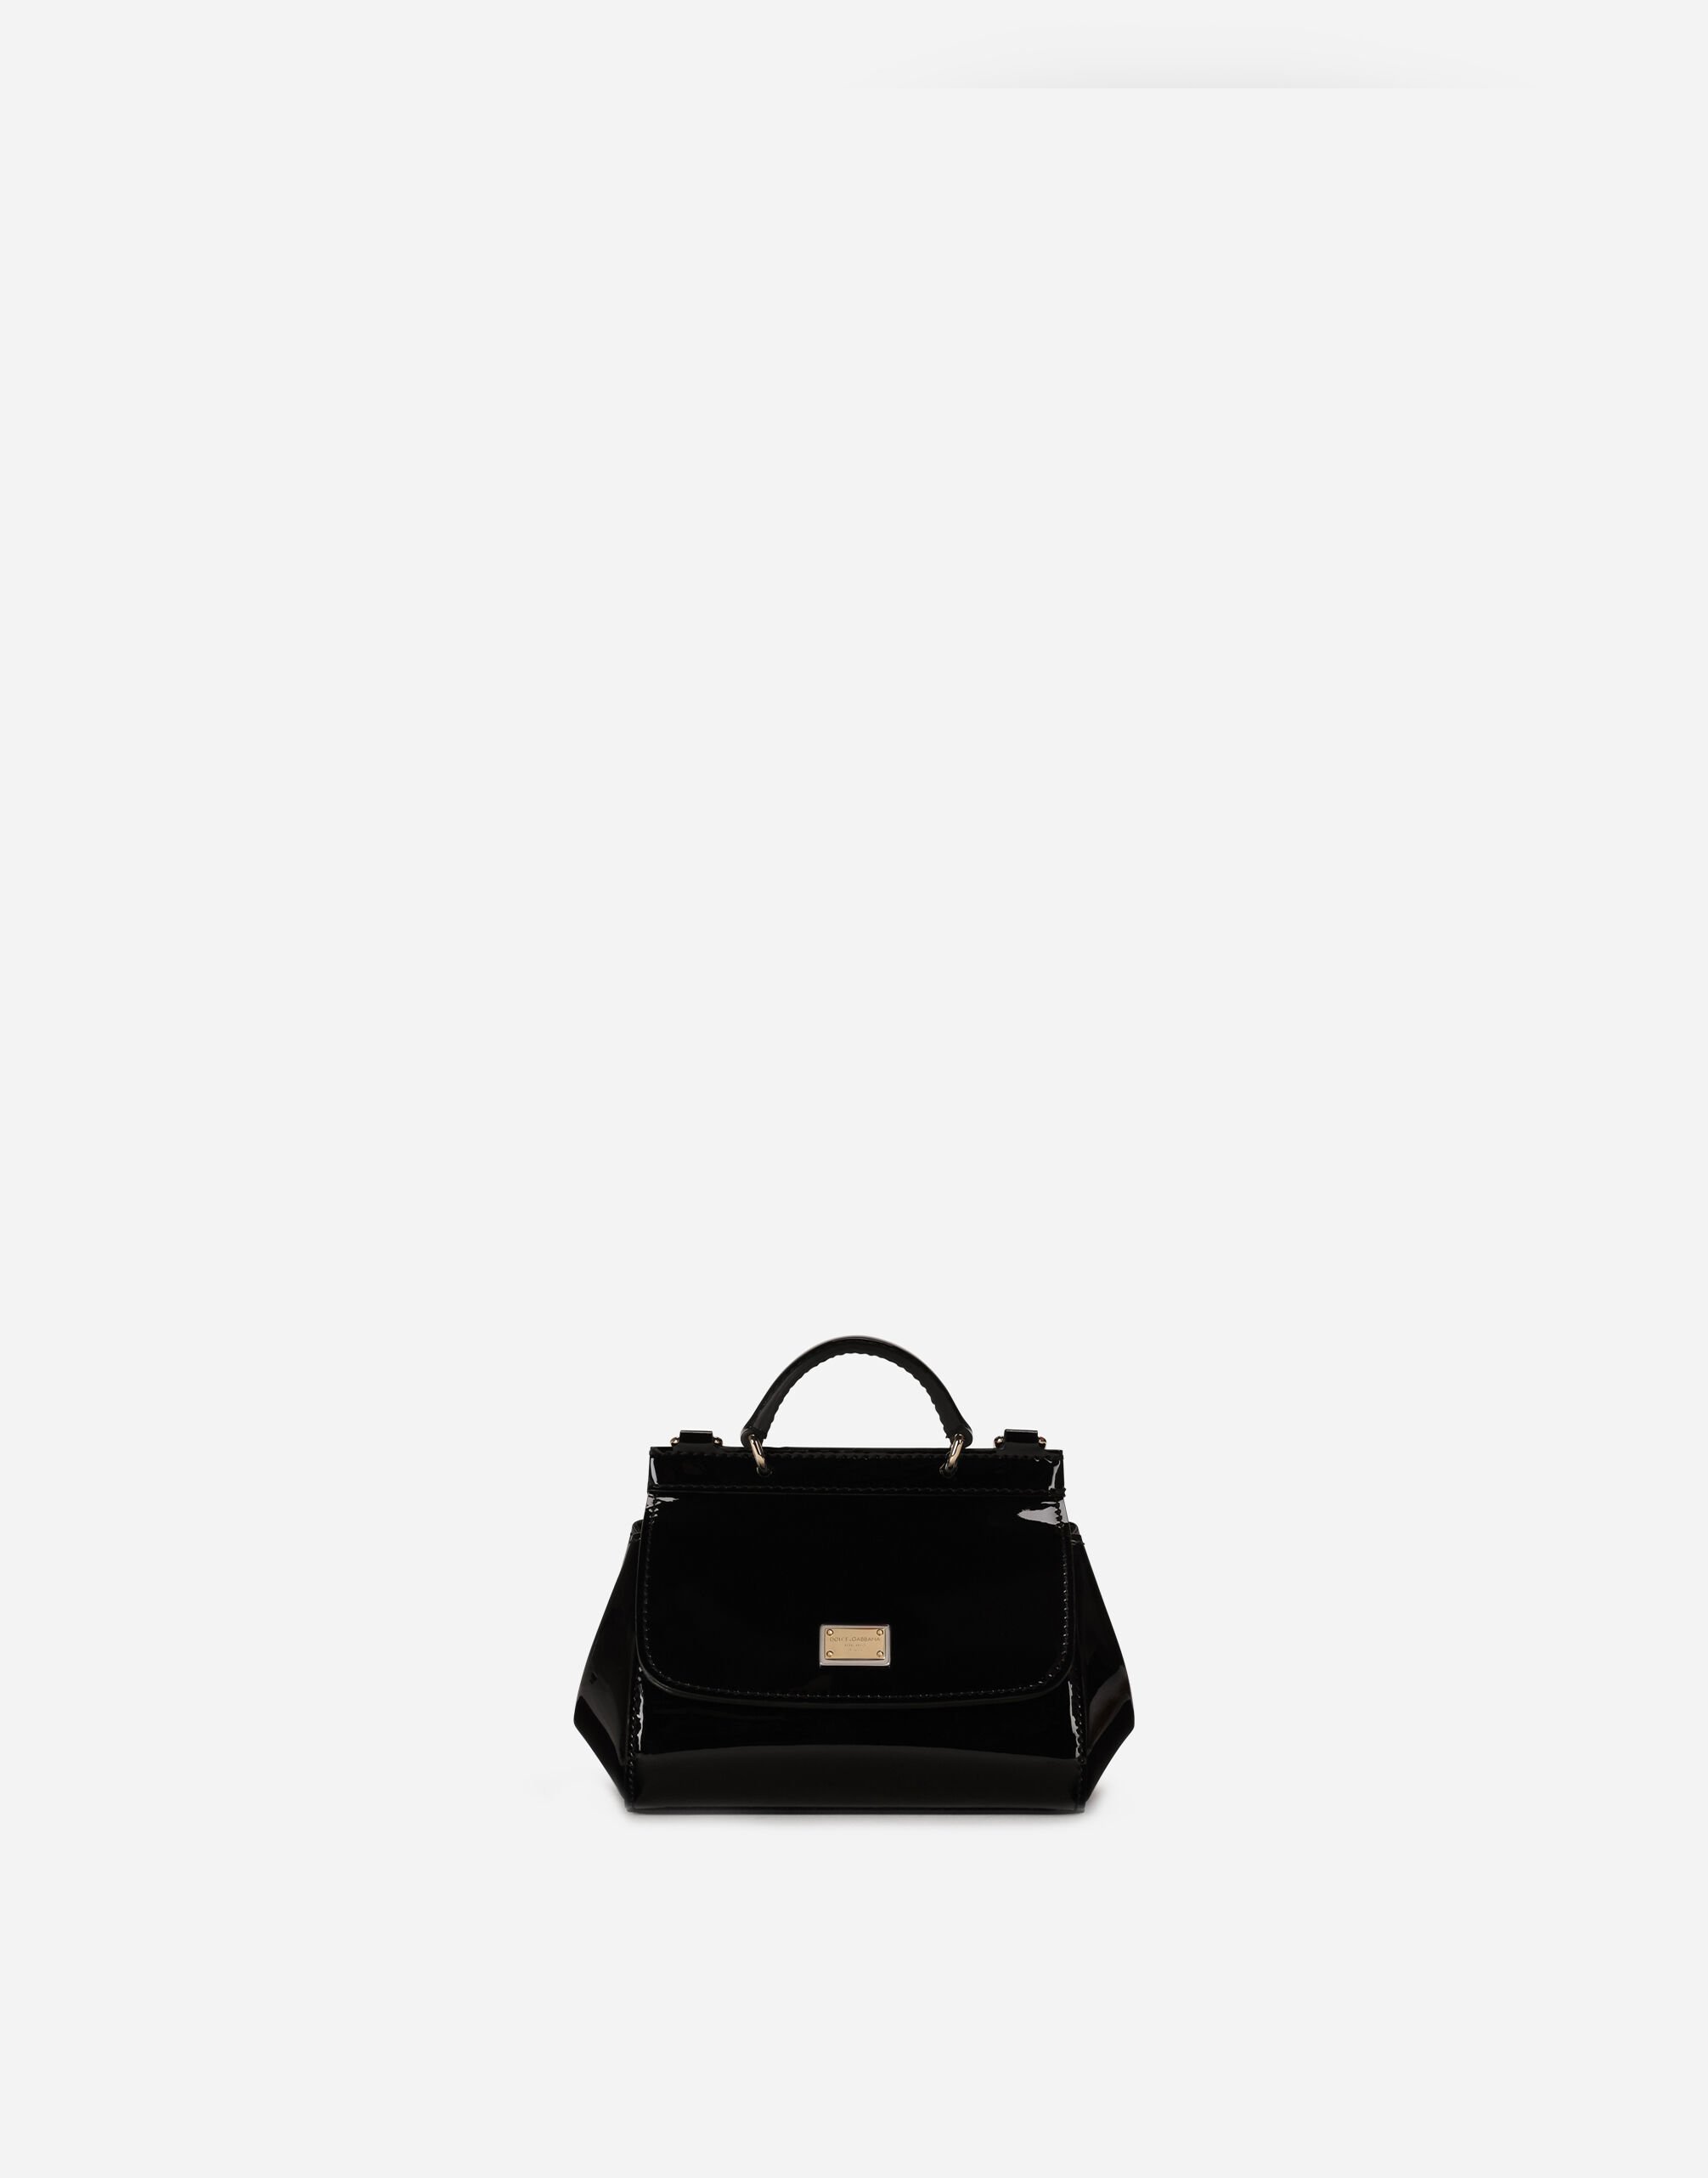 Dolce & Gabbana Patent leather mini Sicily bag Black EB0003AB000